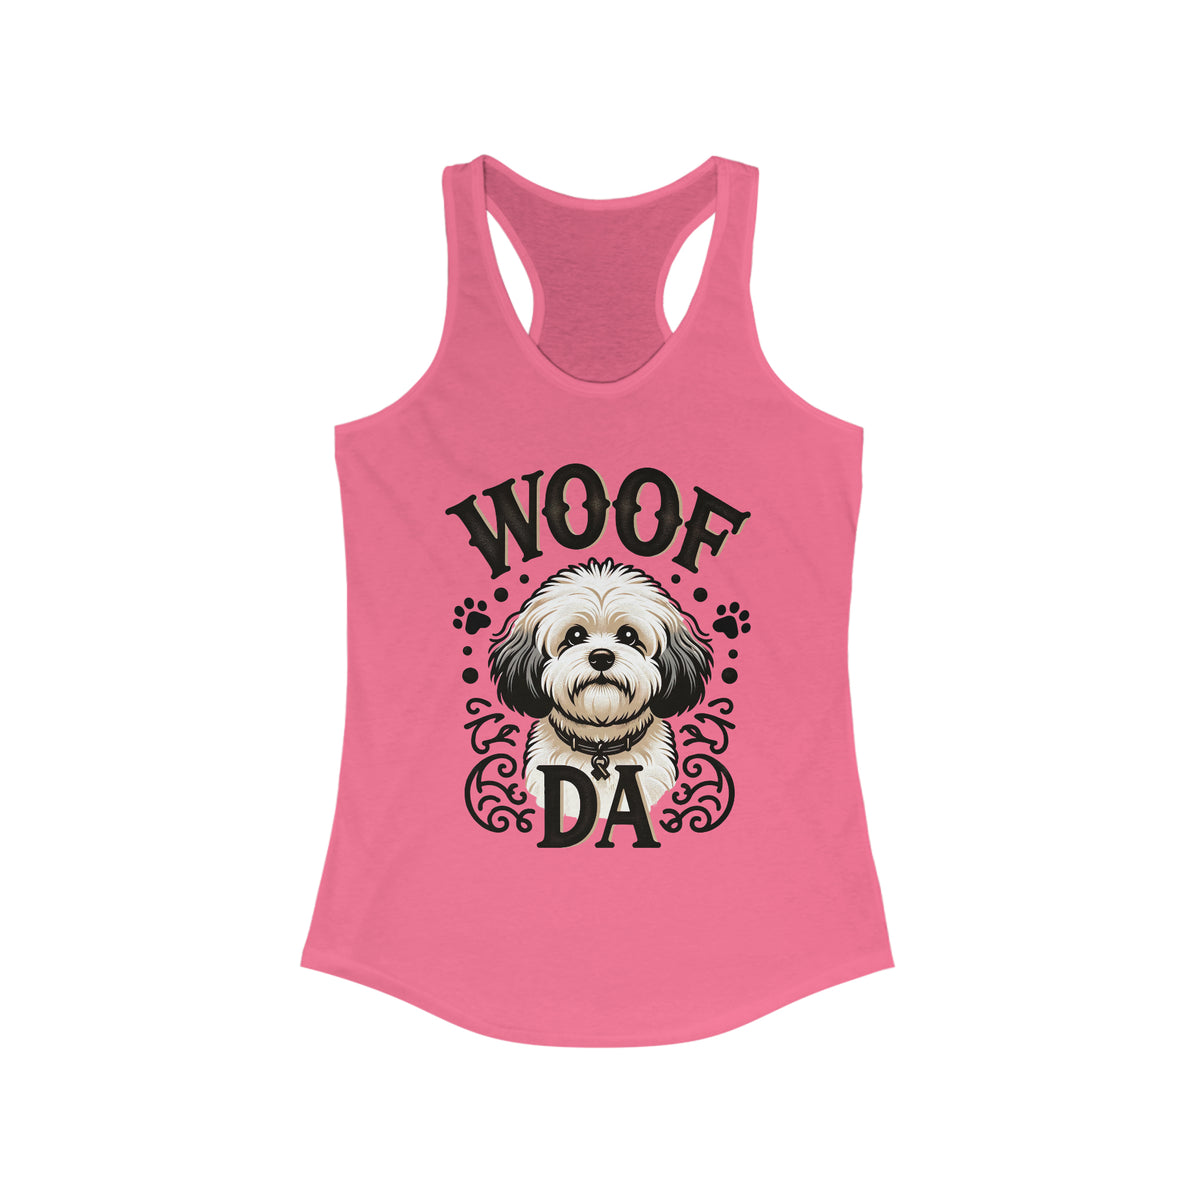 Woof Da Minnesota Dog Lover Shirt | Bichon Frisé Spaniel Mix | Uff Da Norwegian Gift | Women's Slim-fit Racerback Tank Top